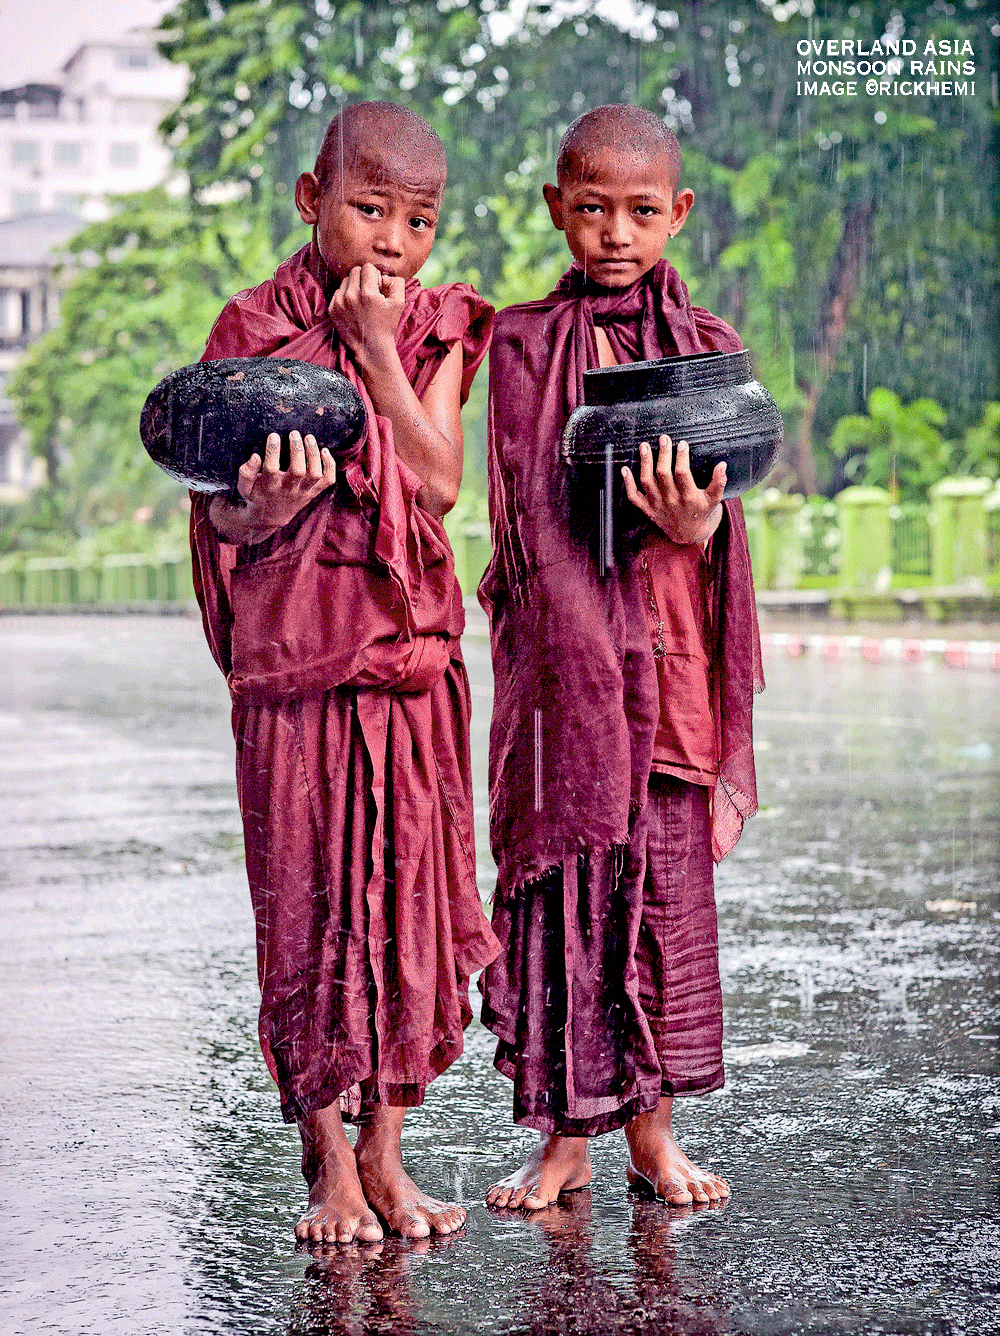 Asia overland, monsoon rains, street photography Asia, DSLR image by Rick Hemi